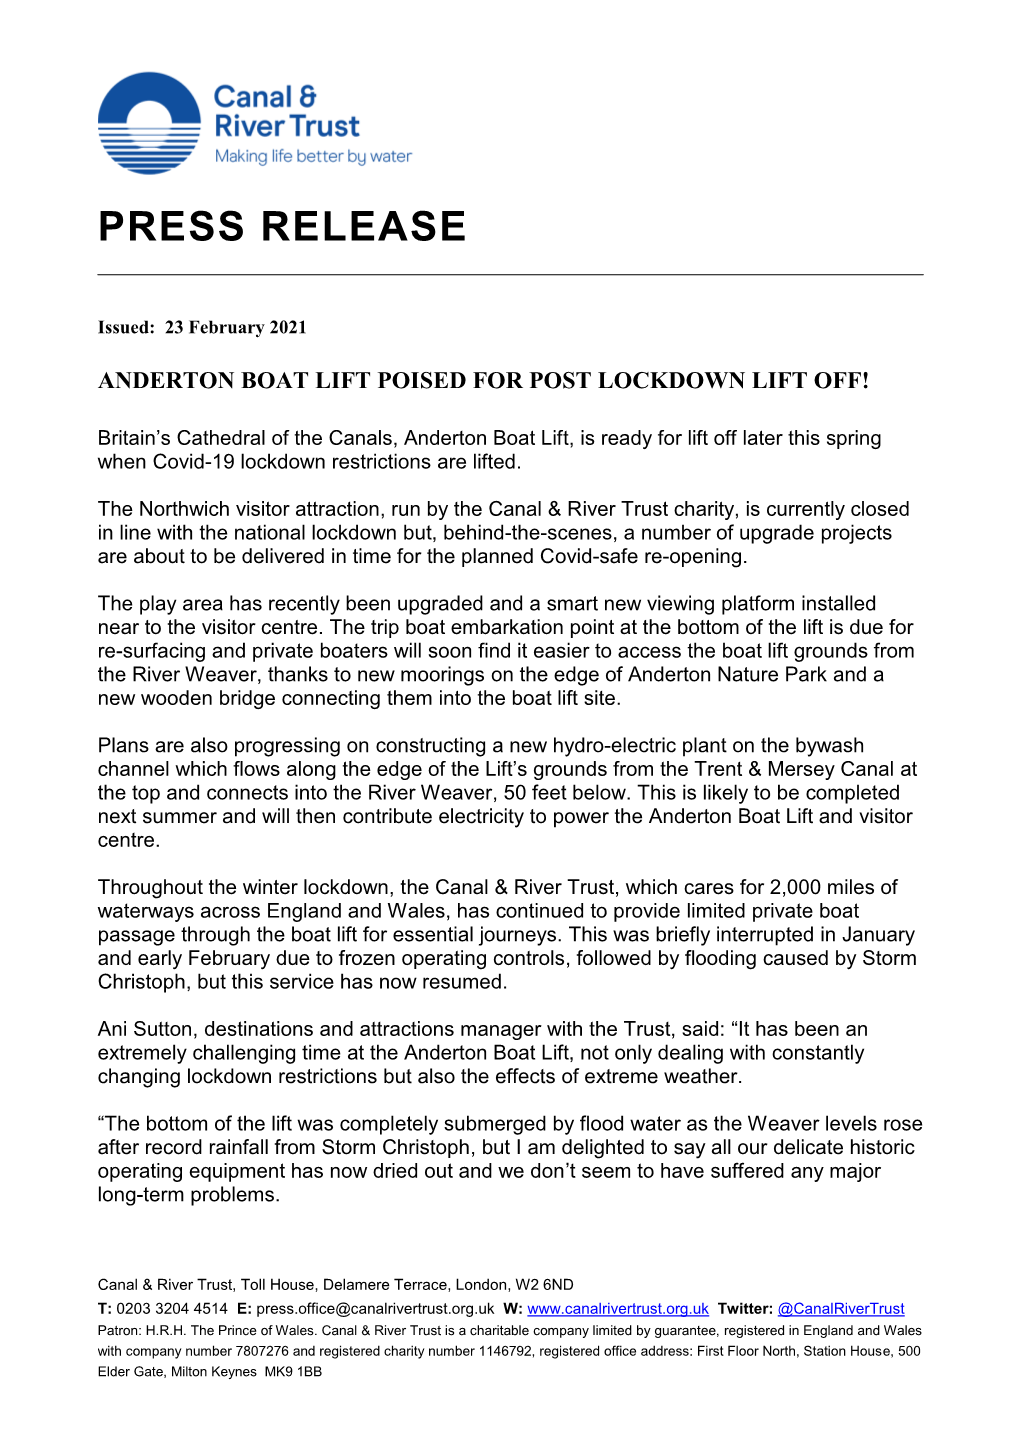 Anderton Boat Lift Poised for Post-Lockdown Lift Off!